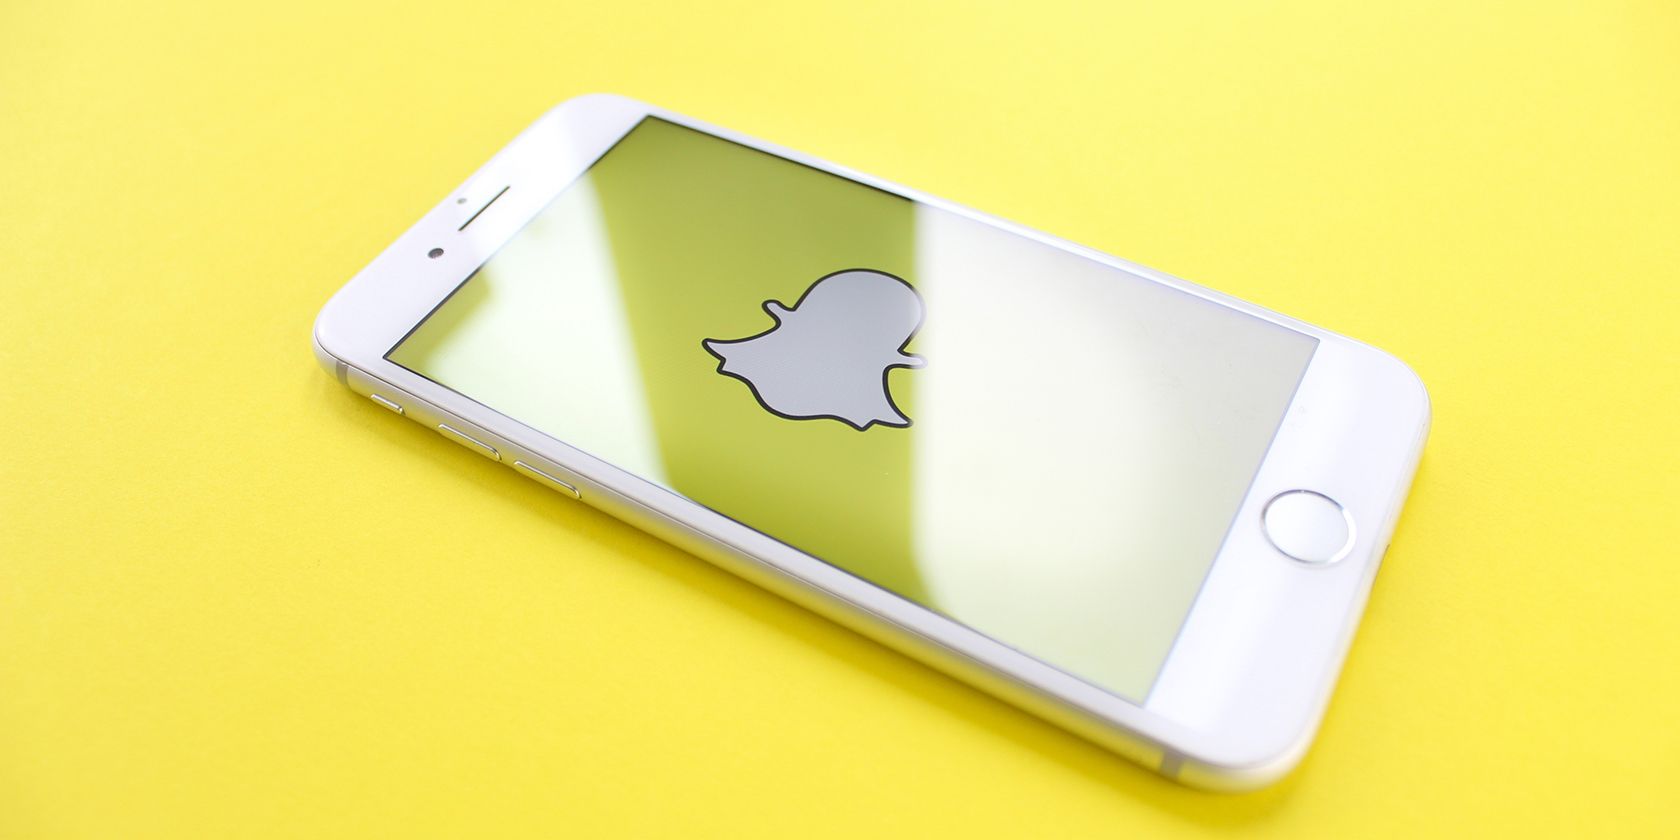 snapchat logo on iPhone